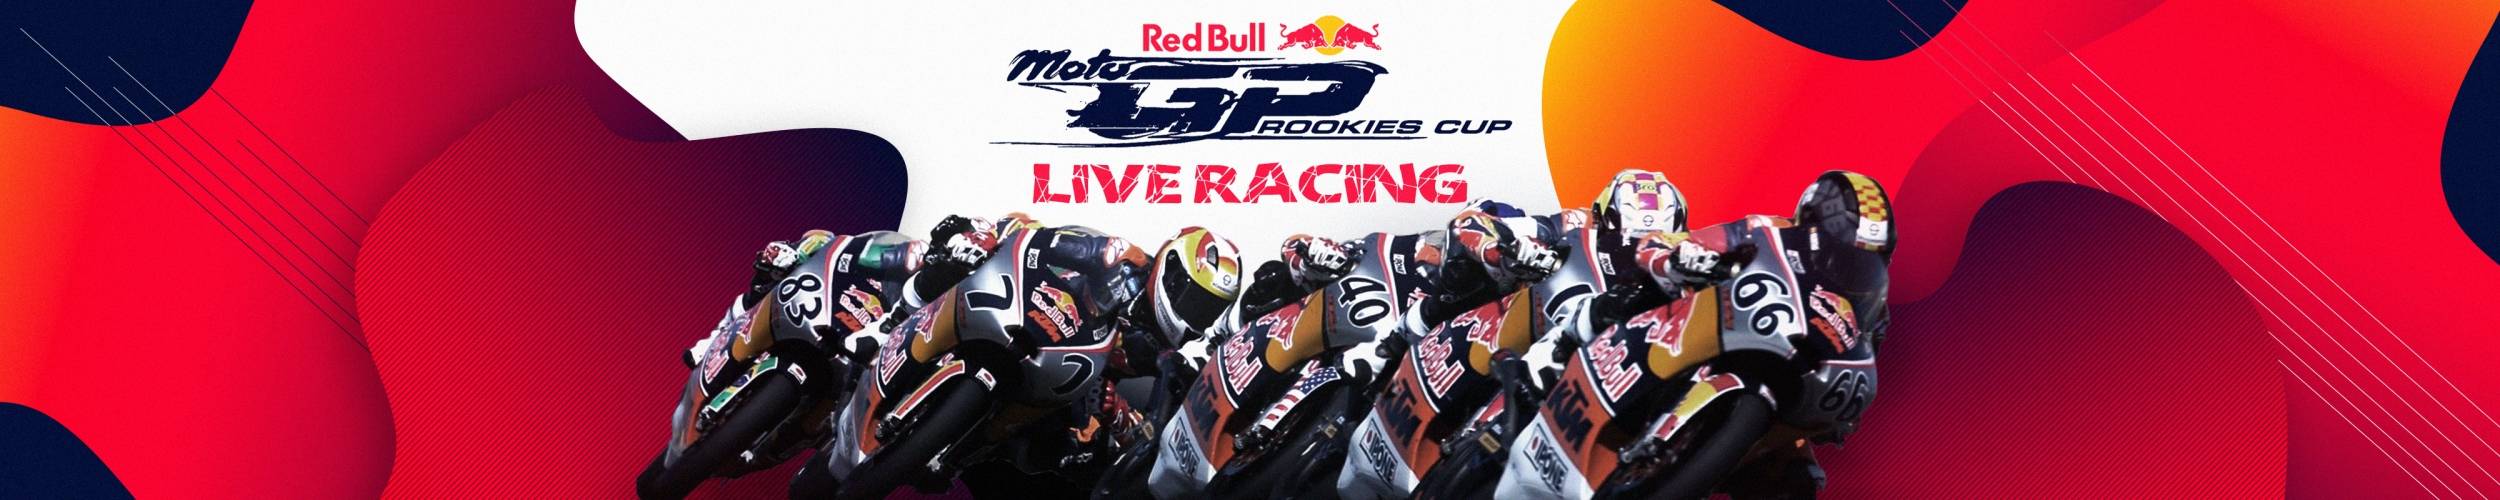 Red Bull MotoGP Rookies Cup Live Racing